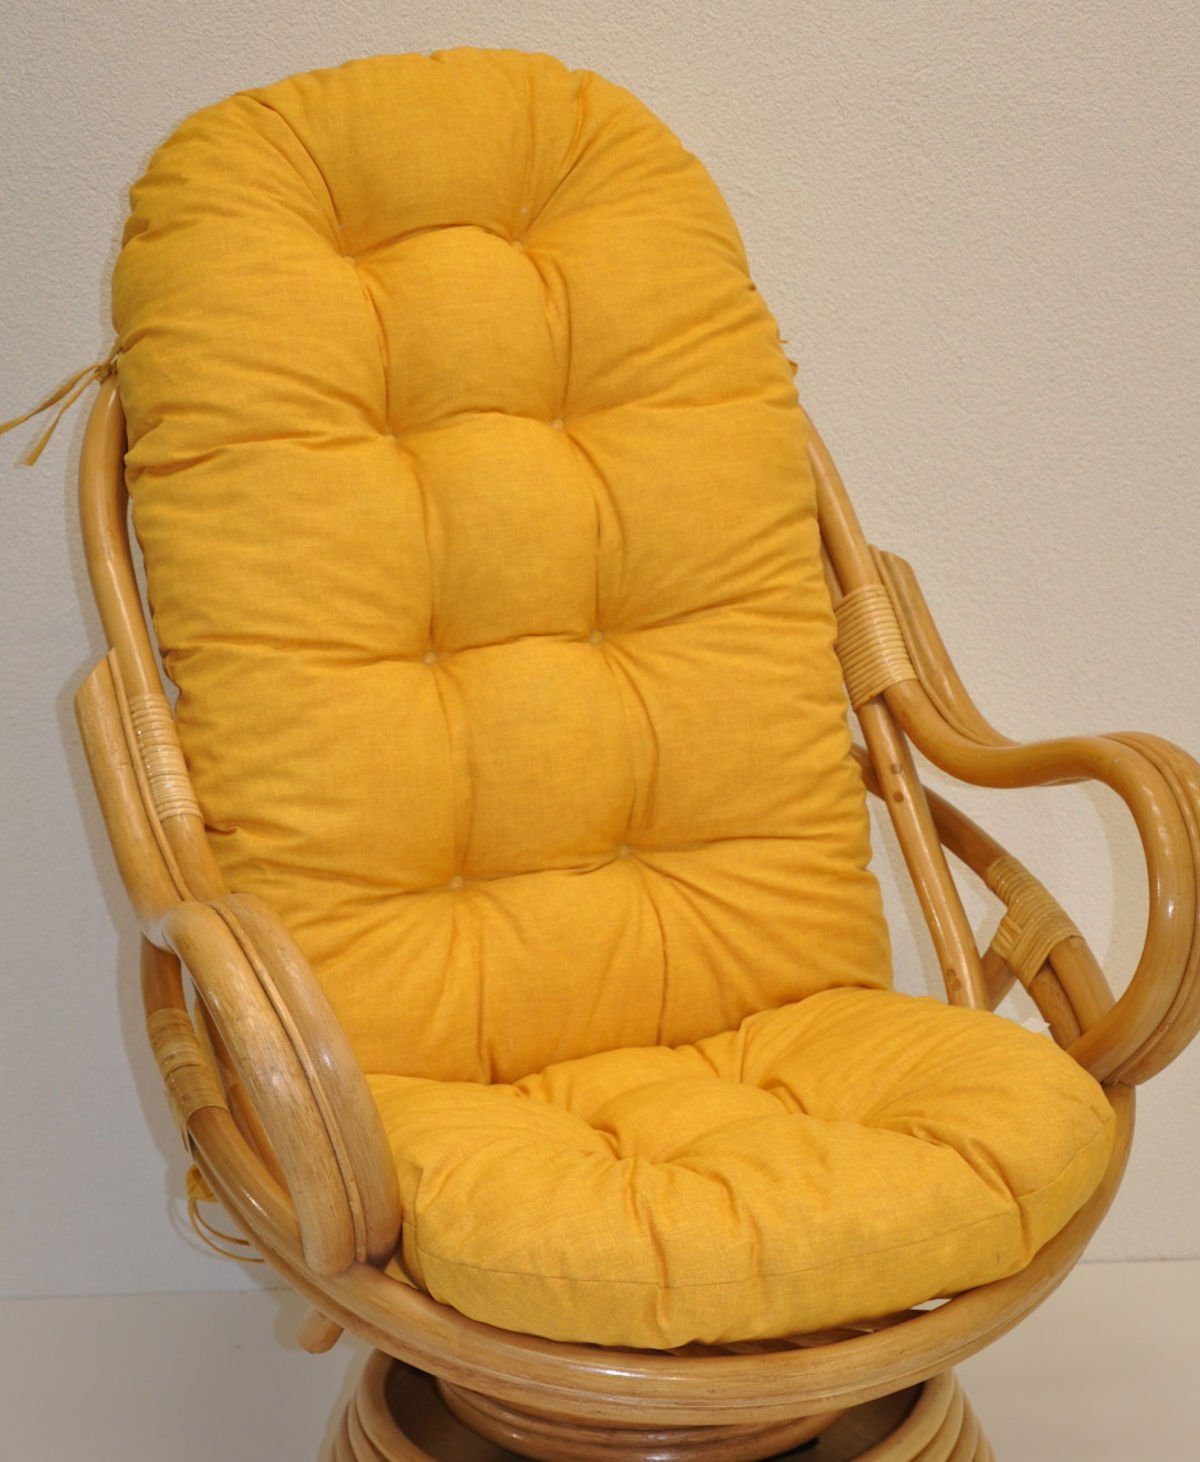 Rattani Sesselauflage Polster für Rattan Schaukelstuhl, Drehsessel L 135  cm, Color gelb | Kopfstützen